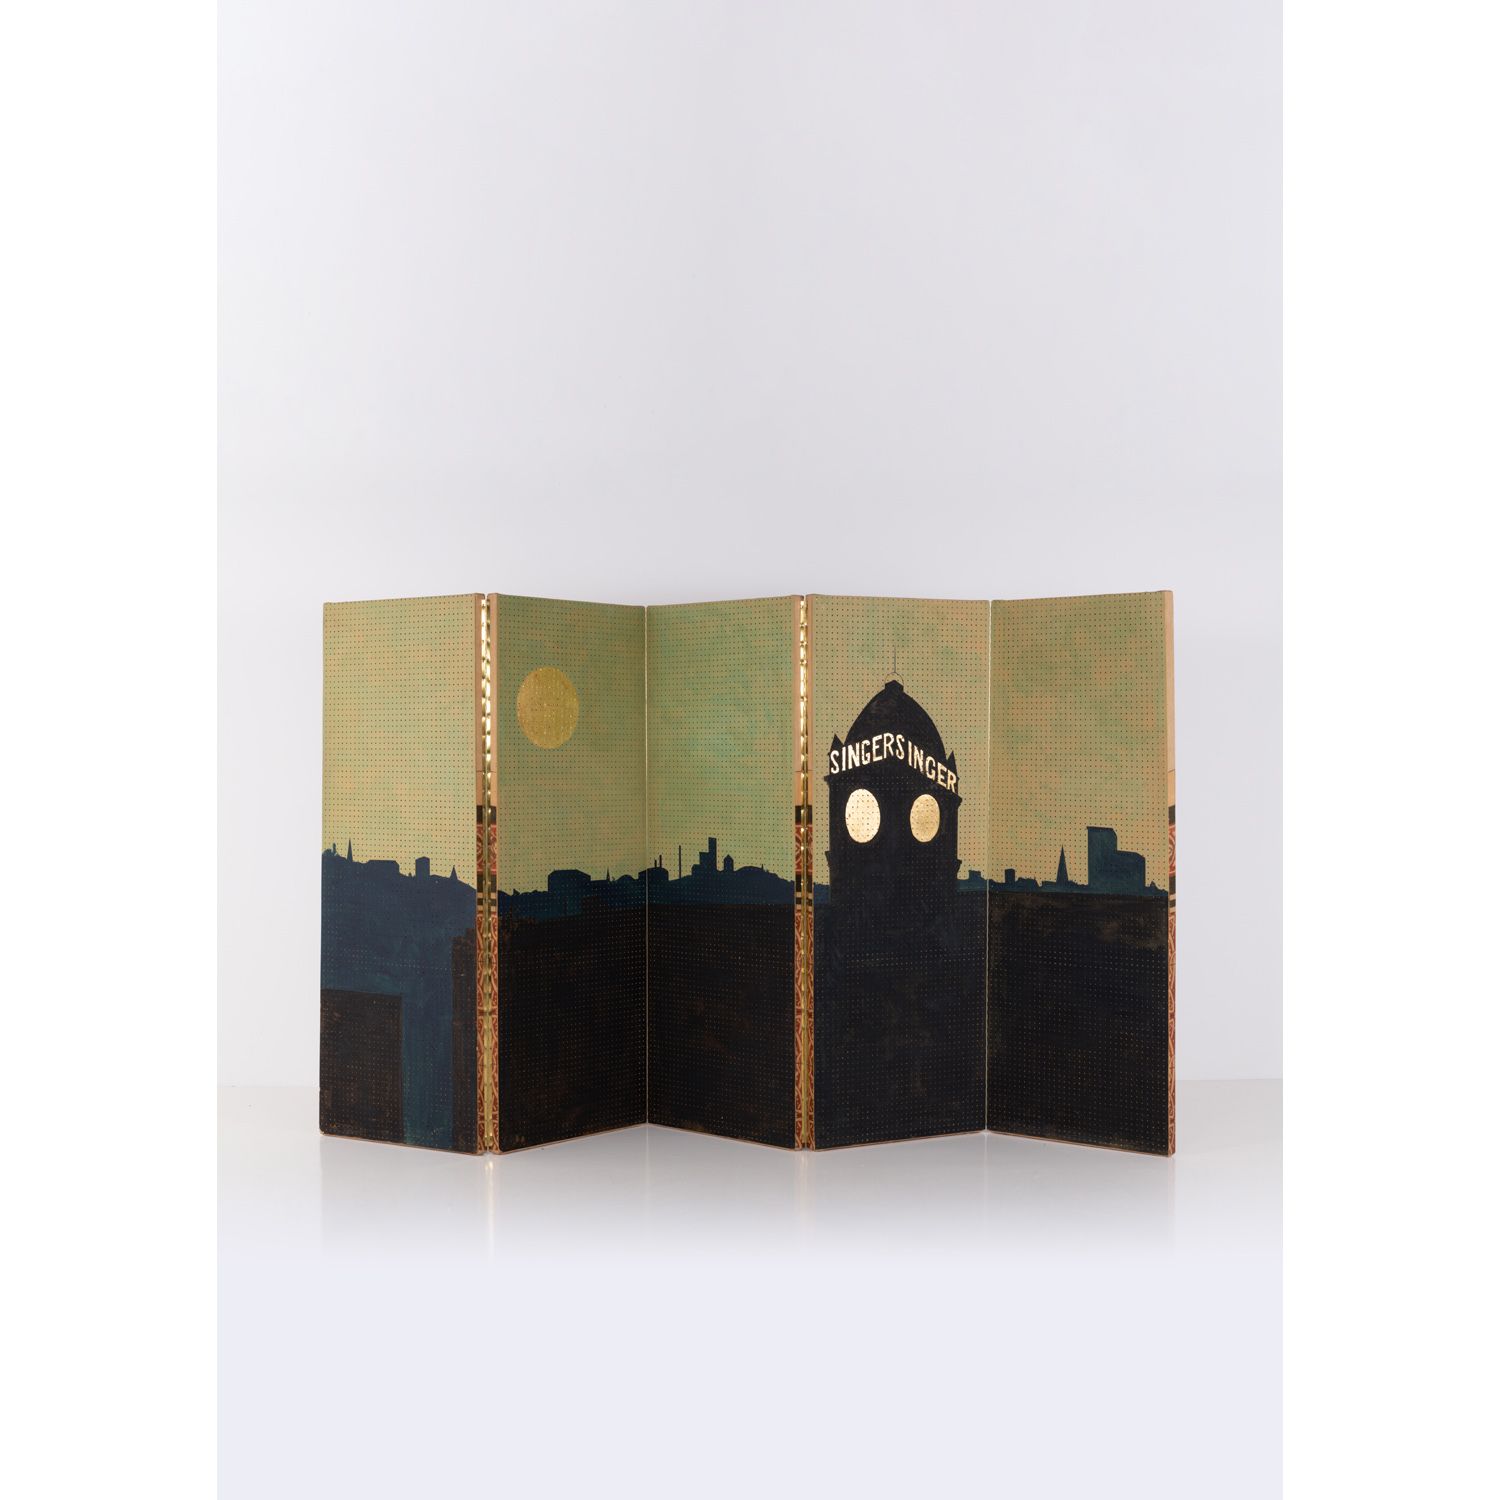 Null 露西-麦肯锡（生于1977年）

克利德班克

五叶屏风

数字印刷在麻布上，油彩和金箔在

刨花板上的金箔

贝卡-利普斯康普工作室

模型创建于2&hellip;